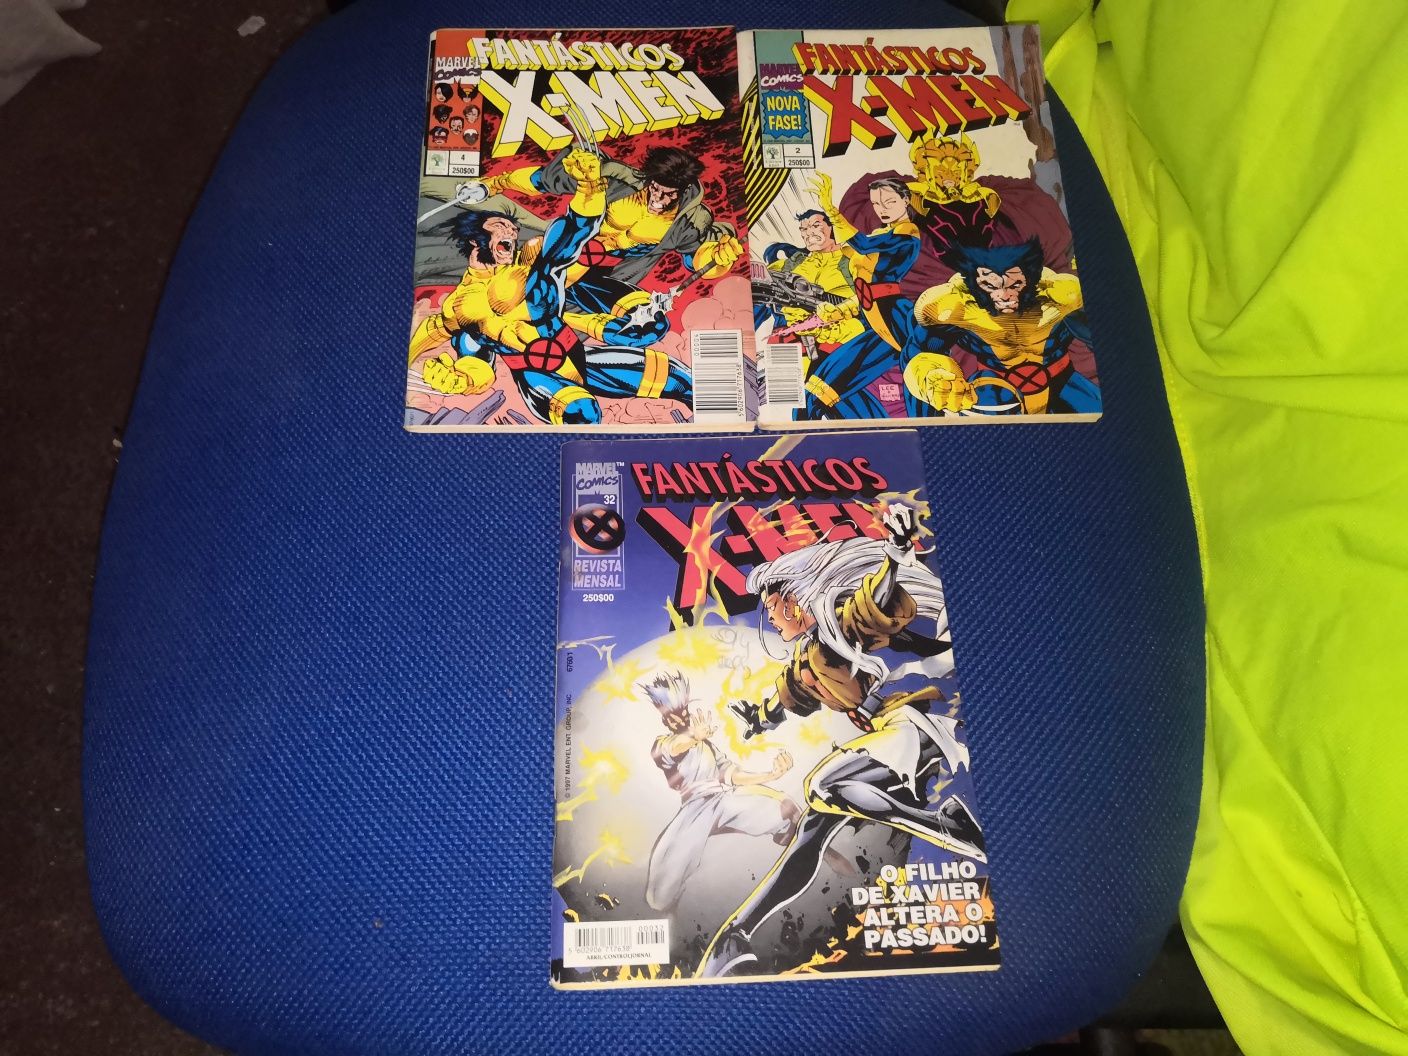 Fantásticos X-Men_19 revistas